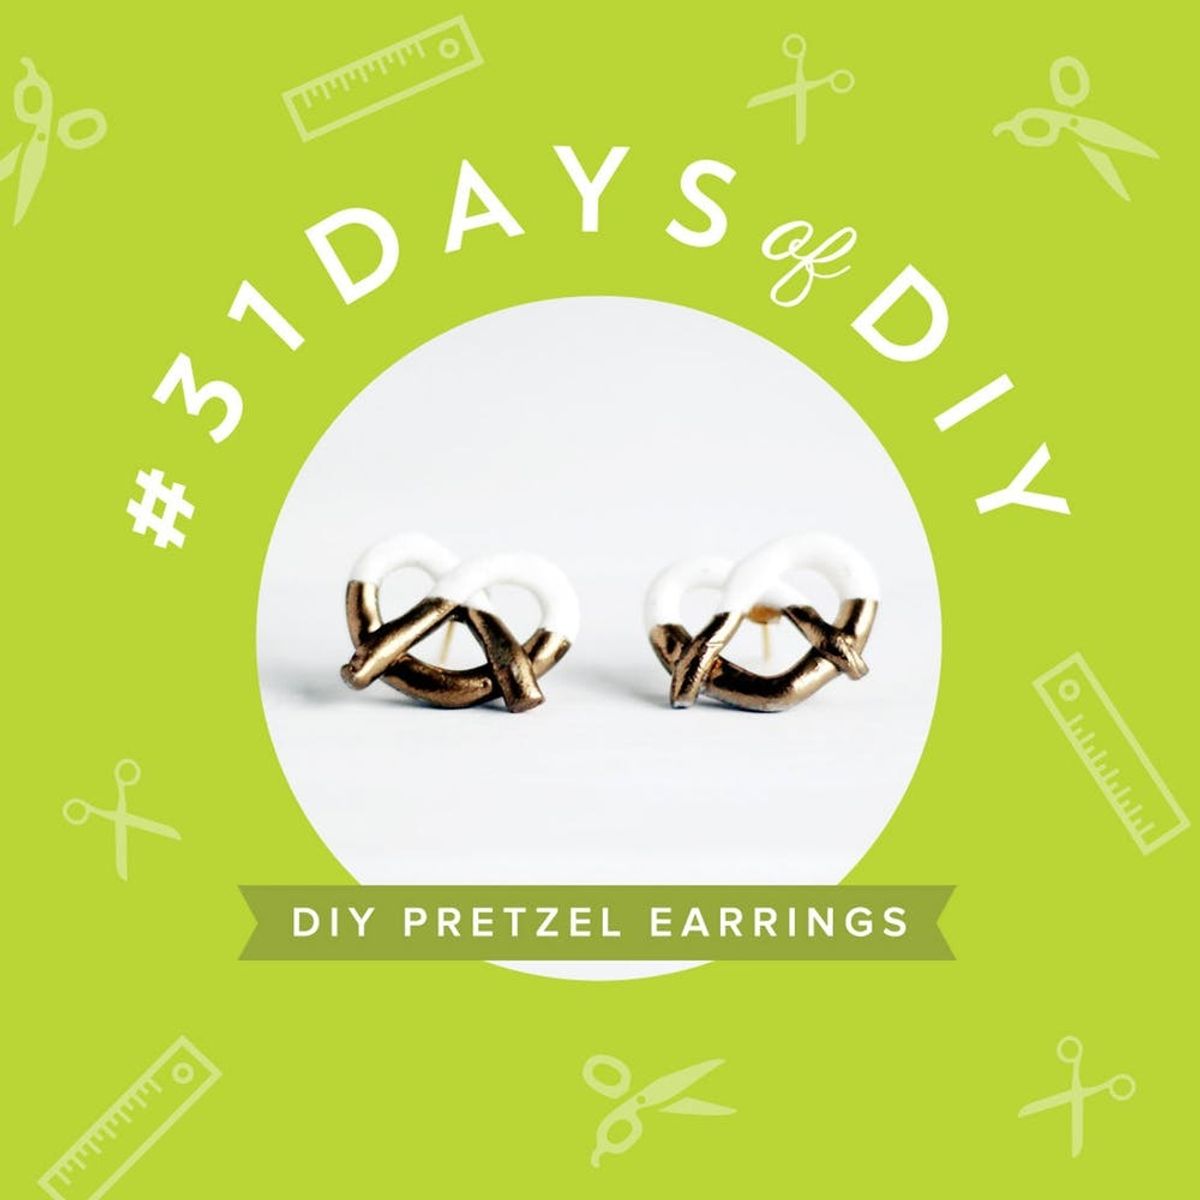 DIY These Marc Jacobs-Inspired Pretzel Earrings for $15